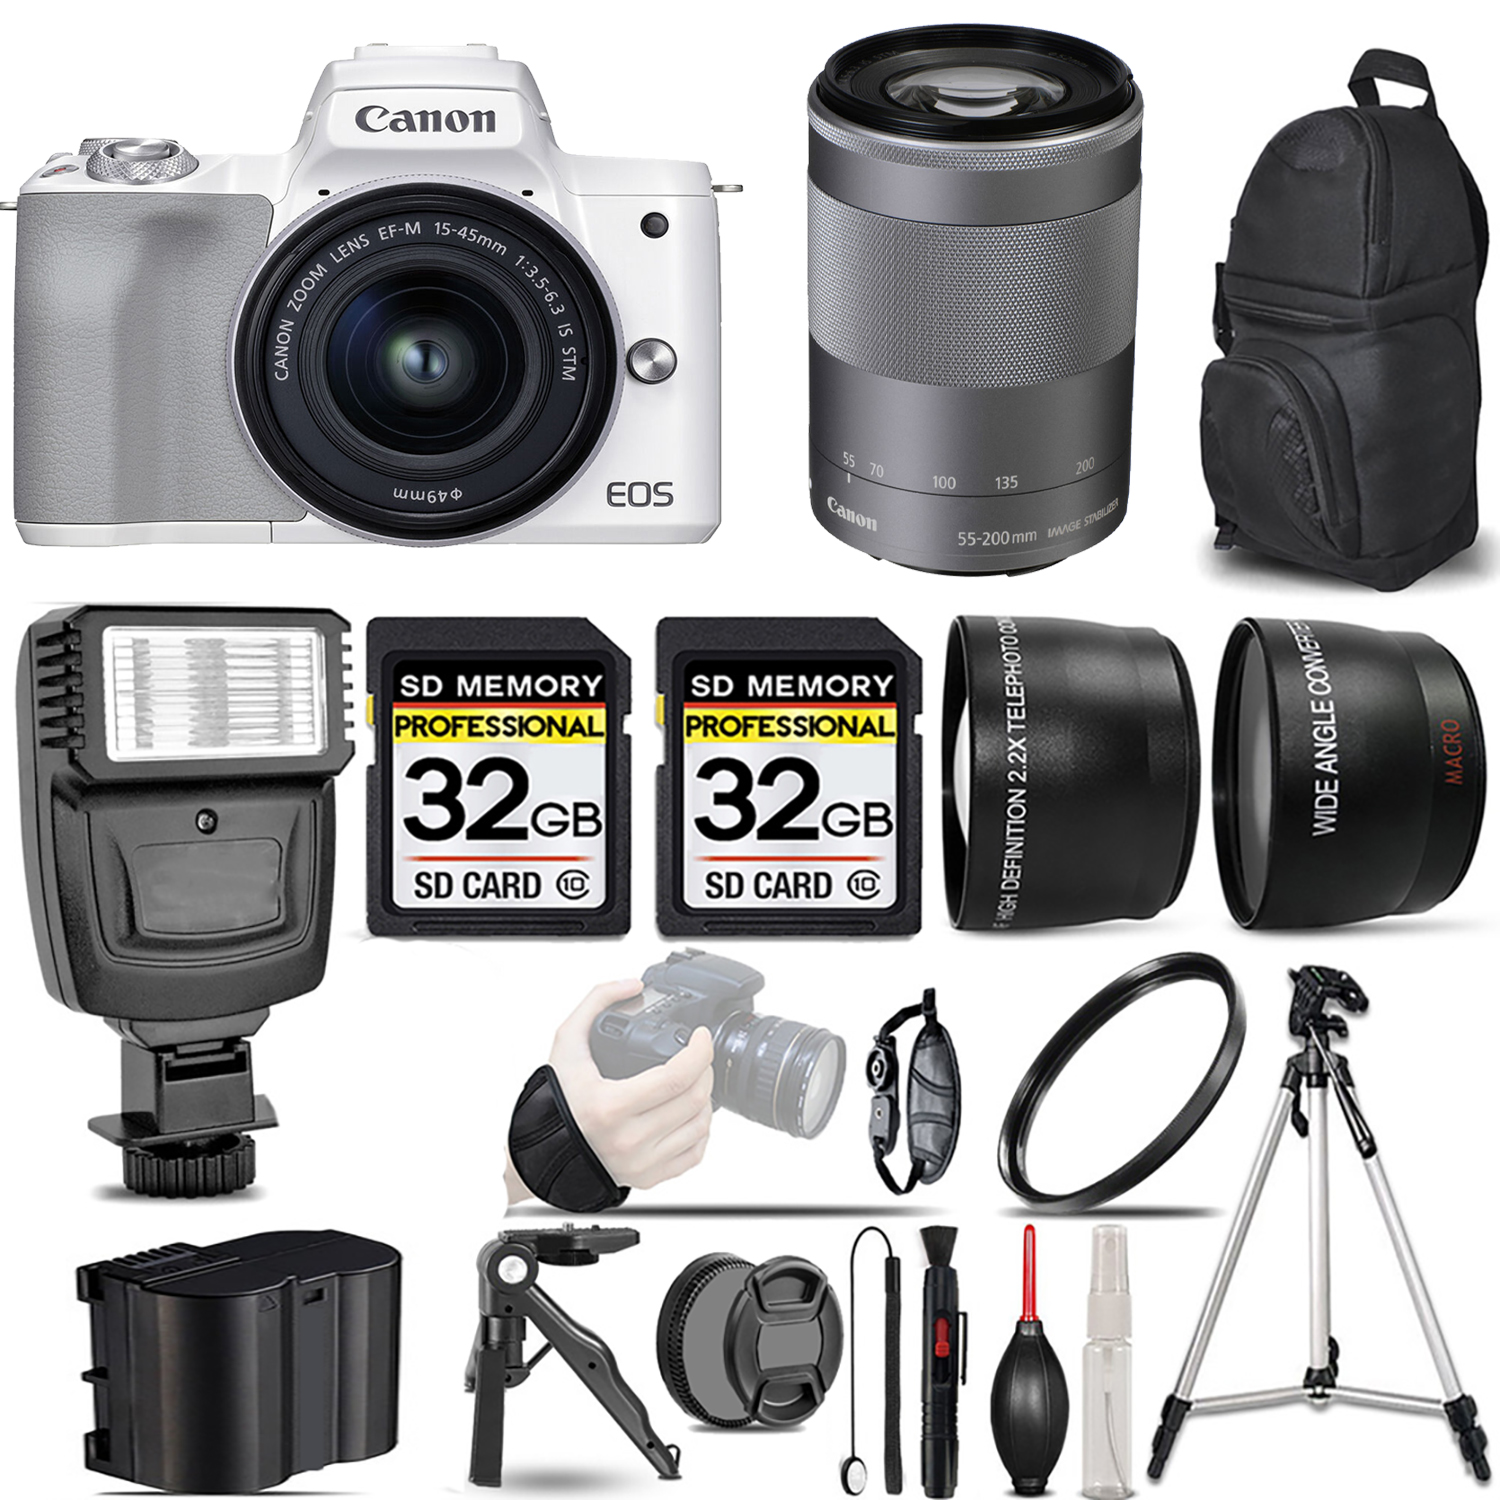 M50 II + 15-45mm Lens (White) + 55-200mm IS Lens (Silver) + Flash + 64GB - Kit *FREE SHIPPING*